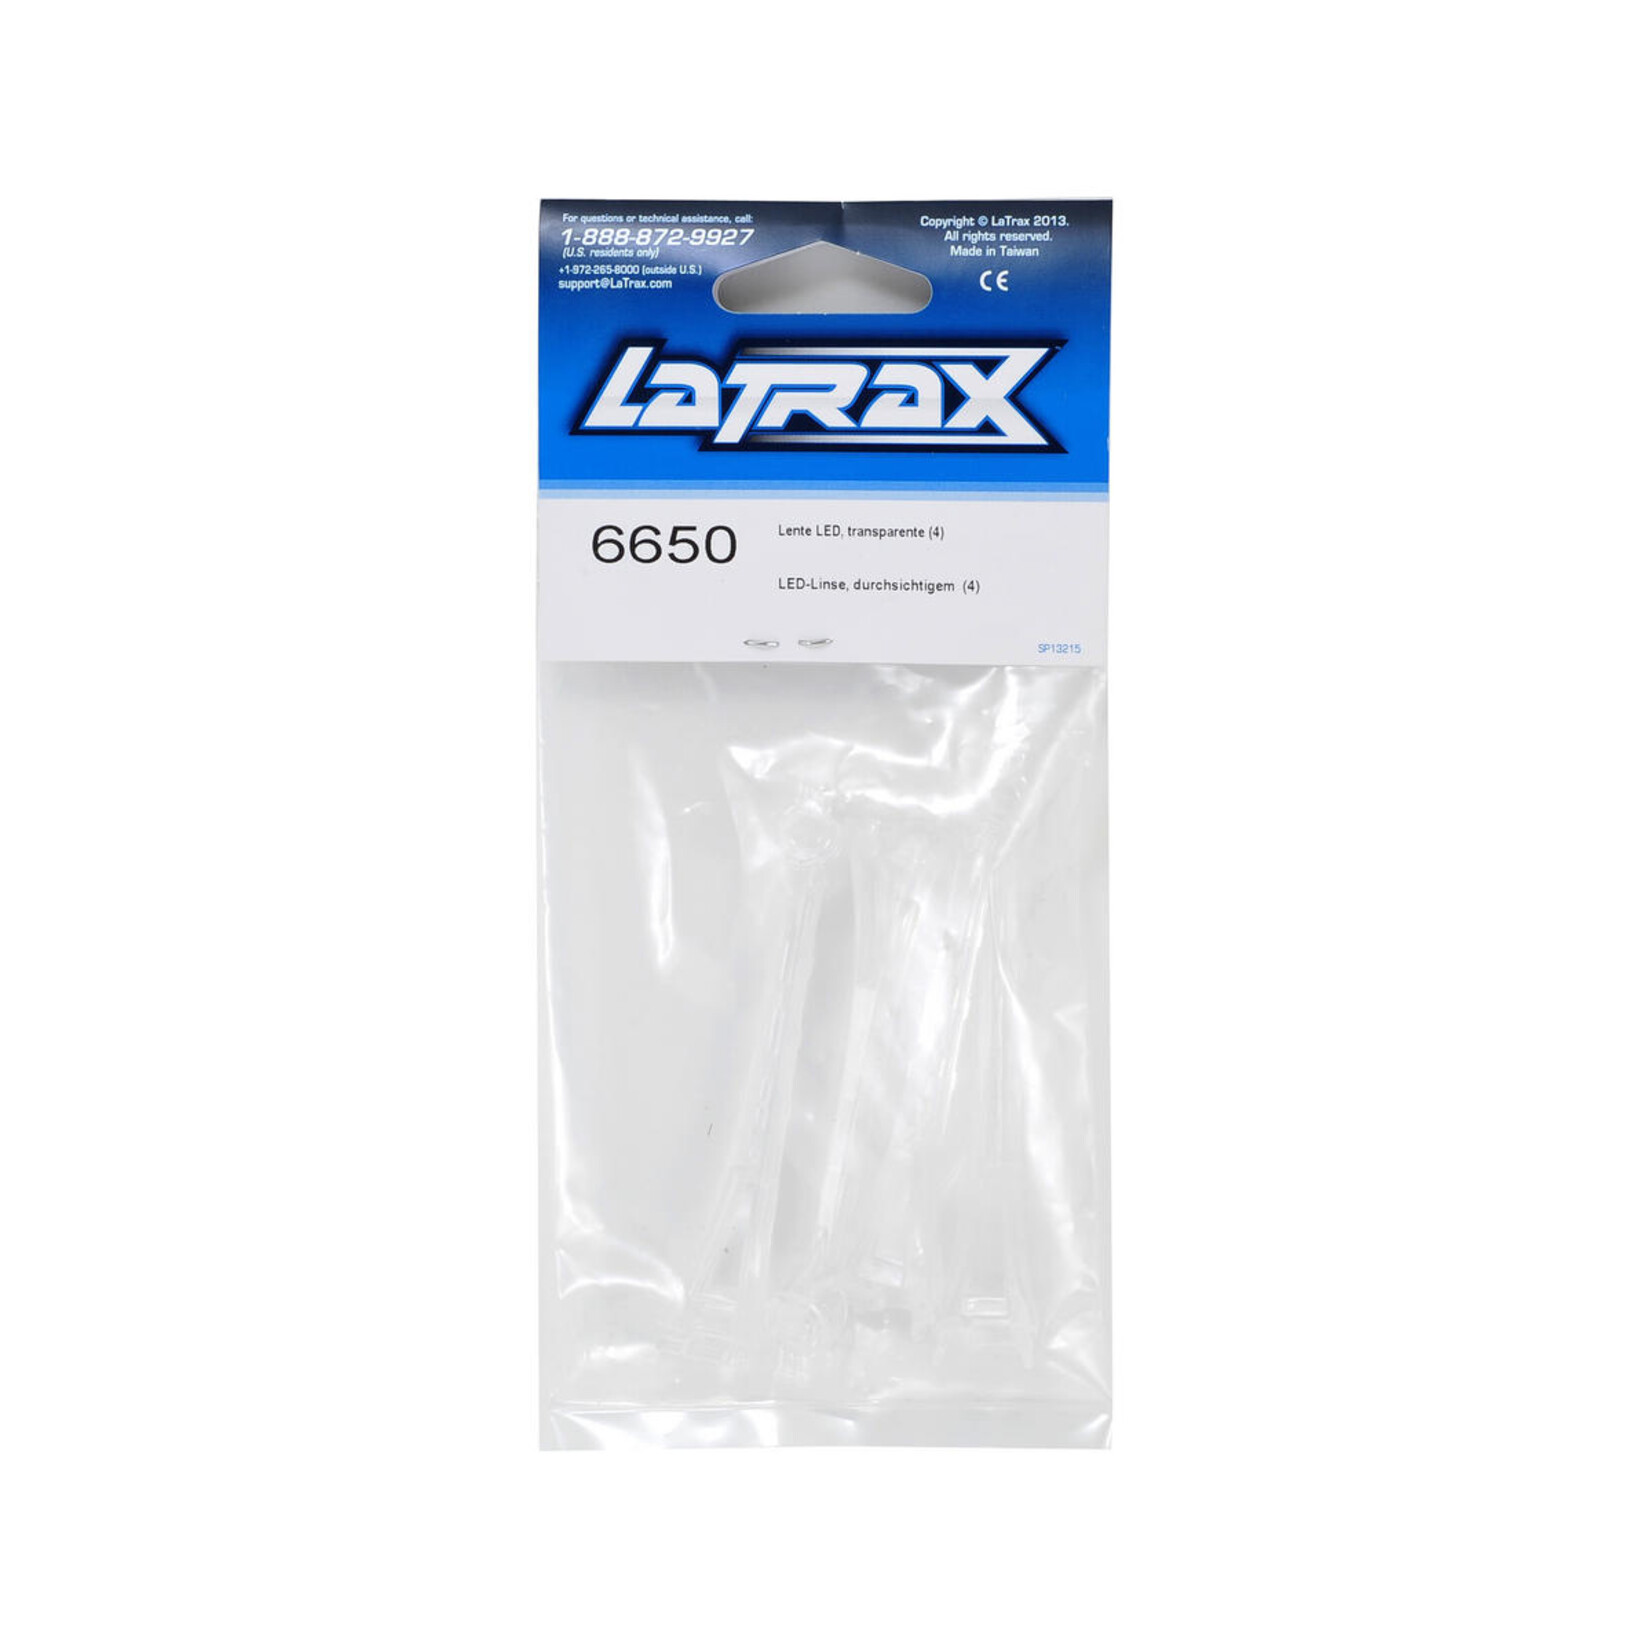 LaTrax Traxxas LaTrax Alias LED Lens (Clear) (4) #6650